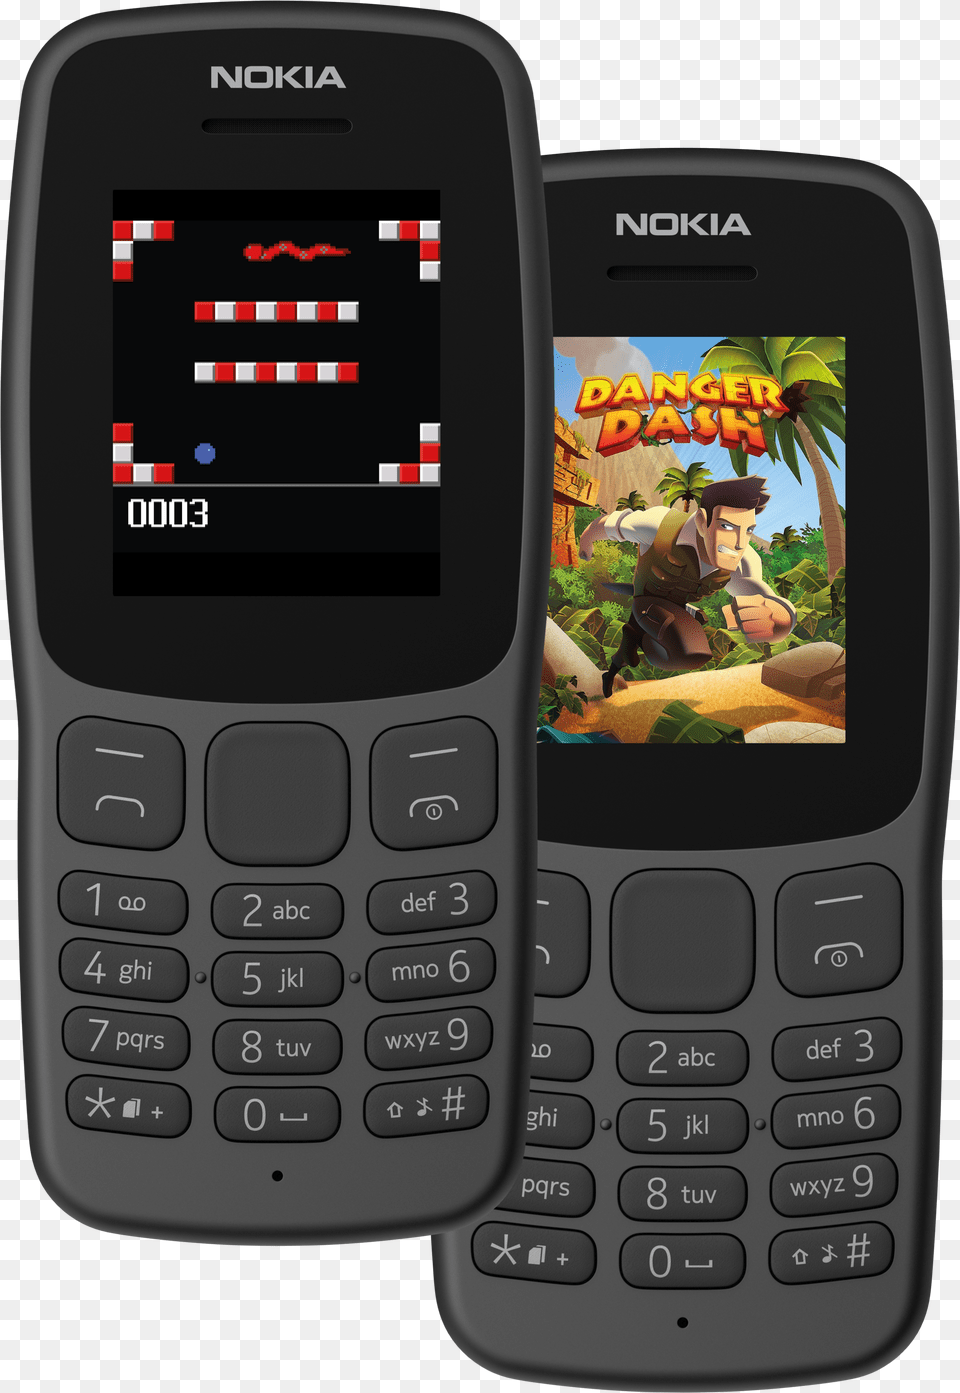 Nokia 106 New Model Nokia 106 Free Png Download